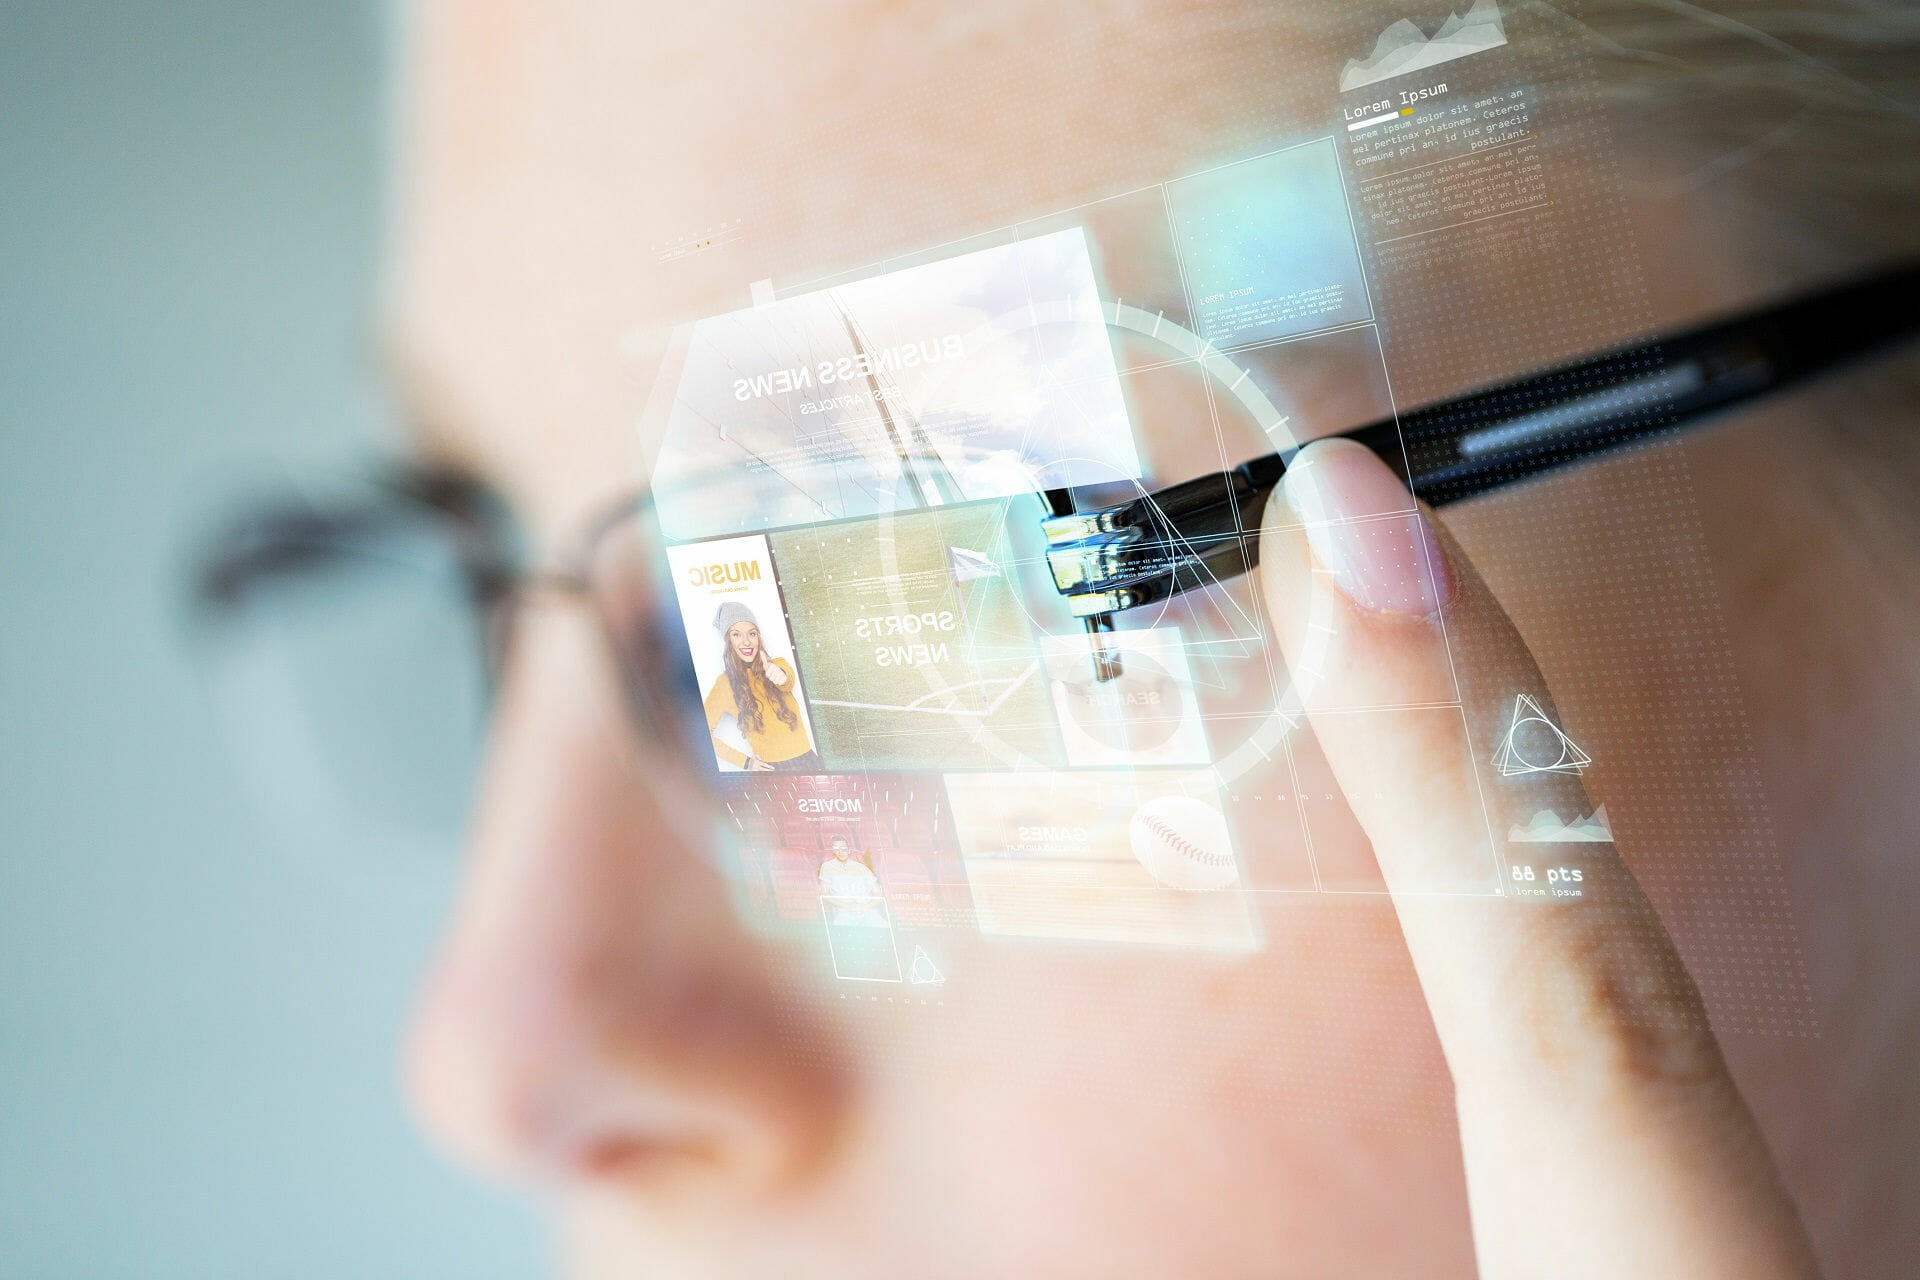 Microsoft patents new smart glasses